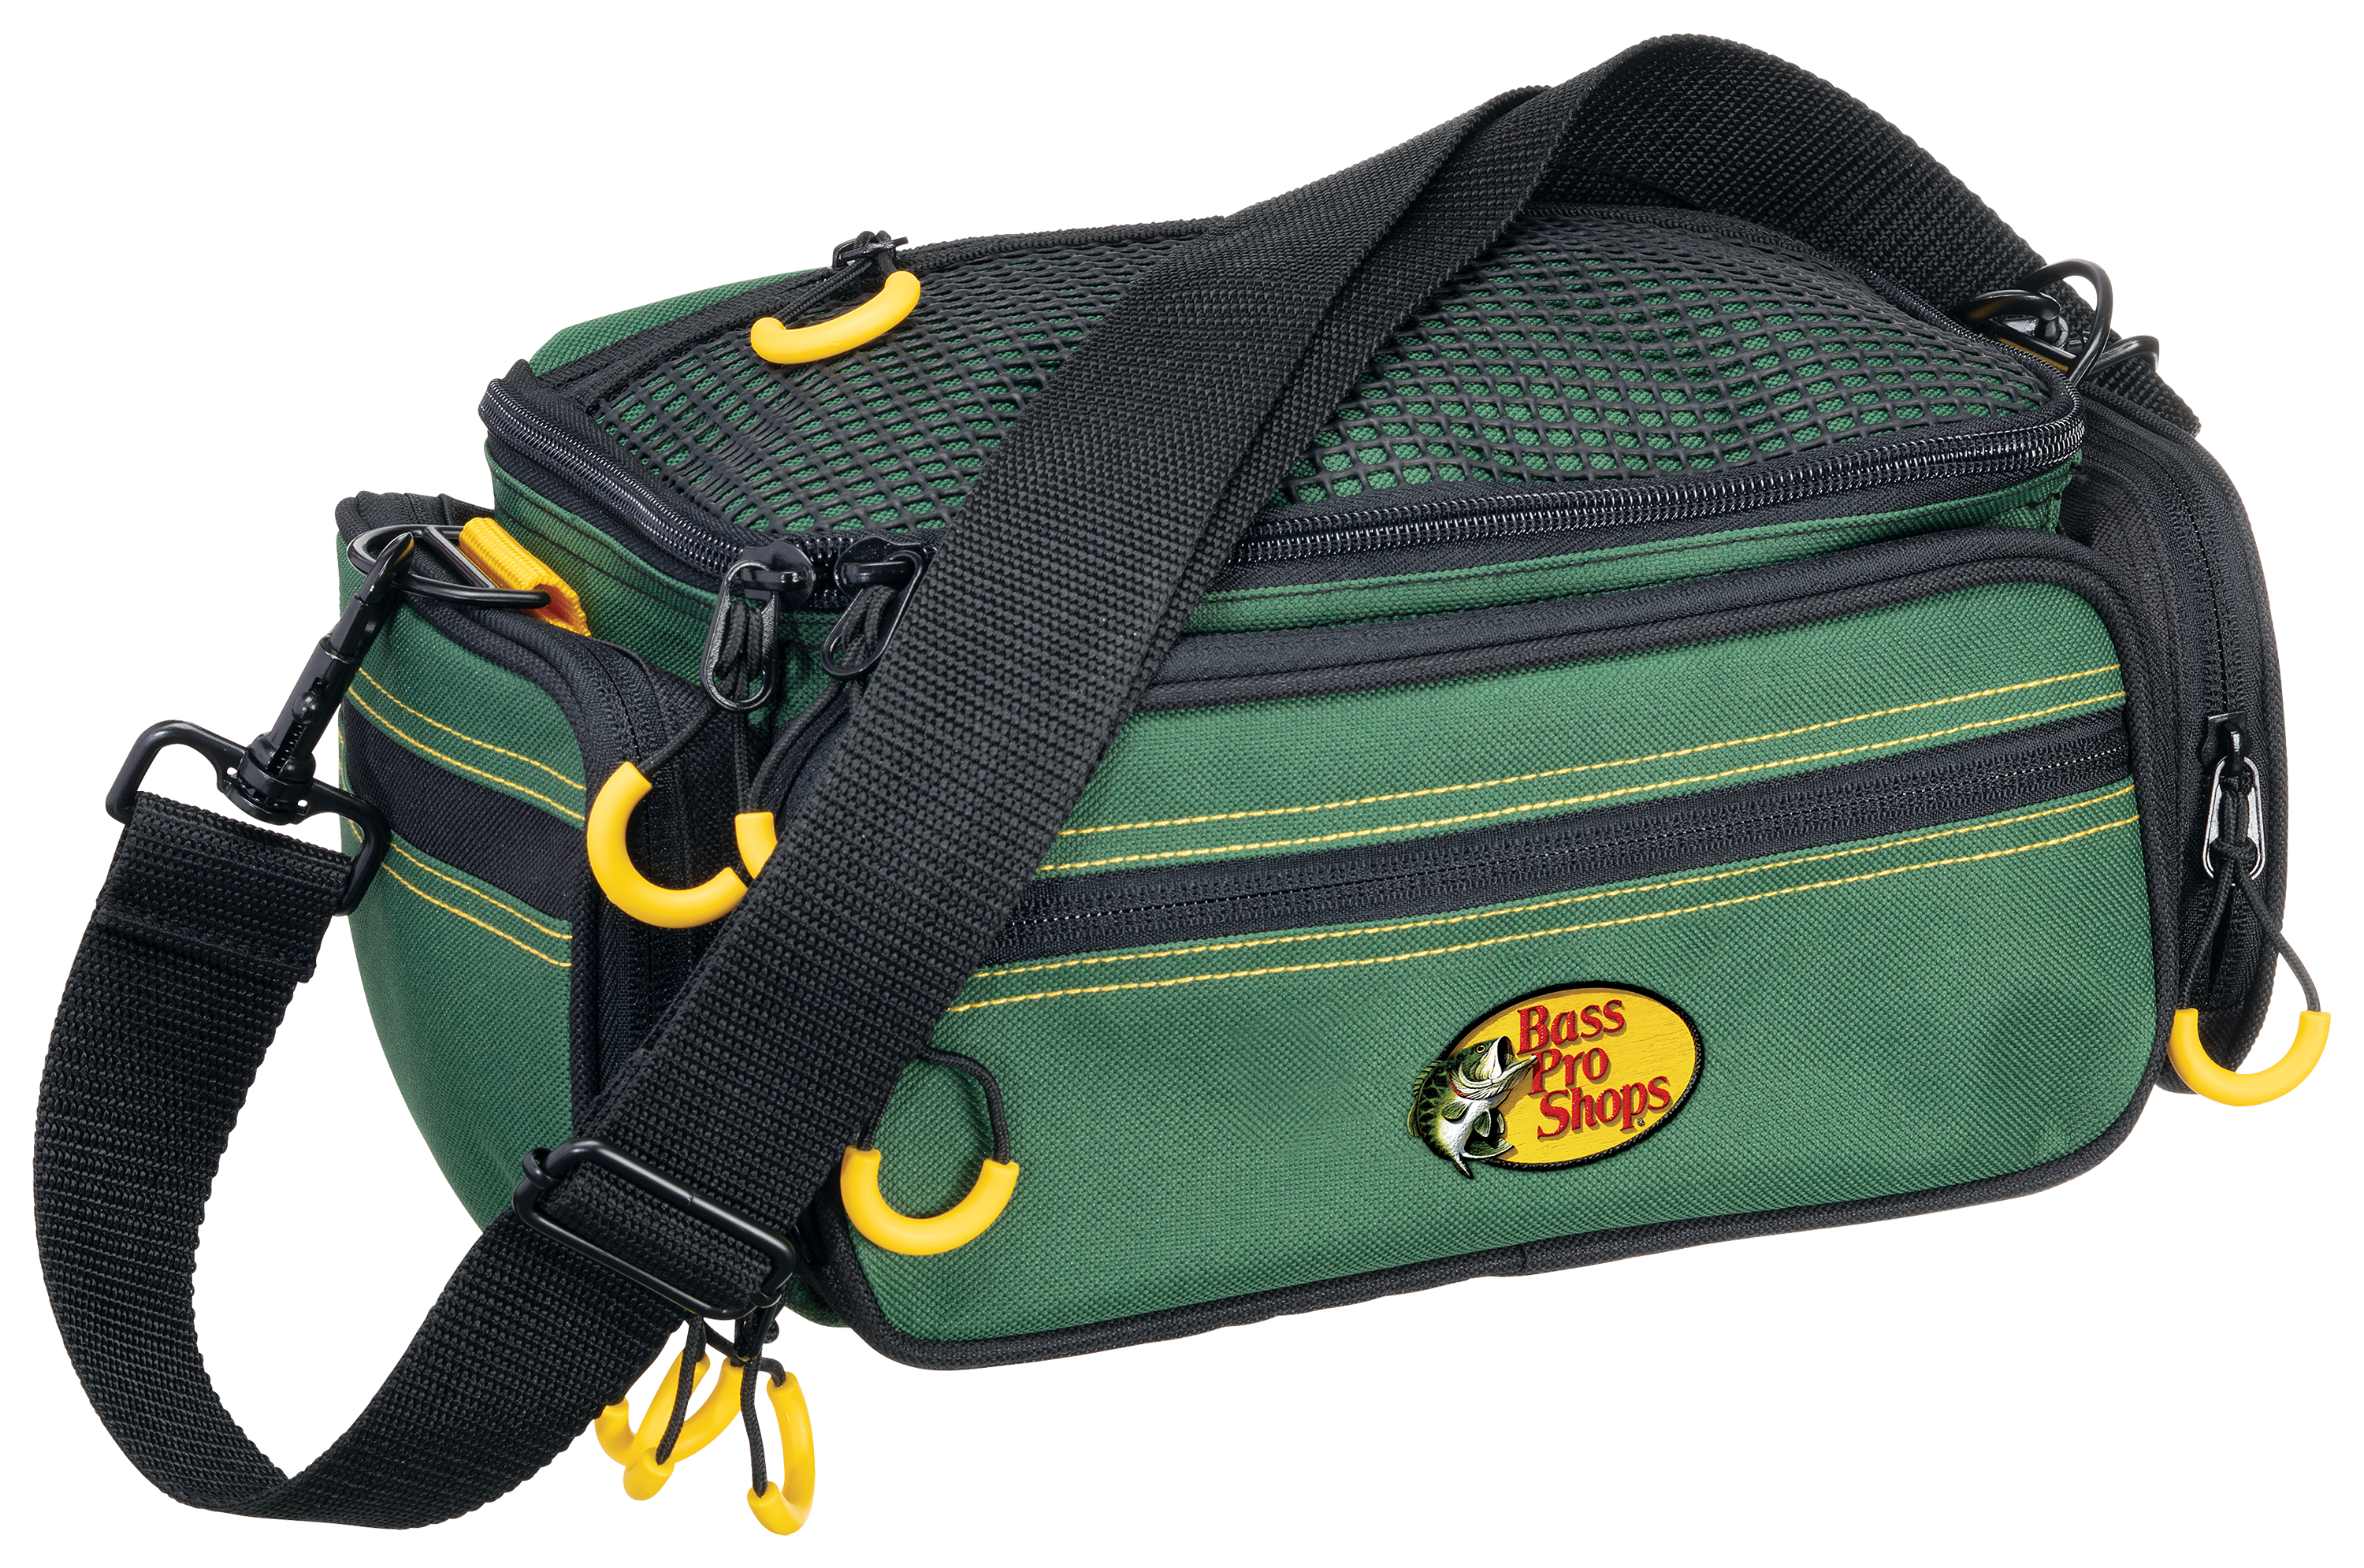 .com : Cabela's Advanced Anglers Large Tackle Bag with 6